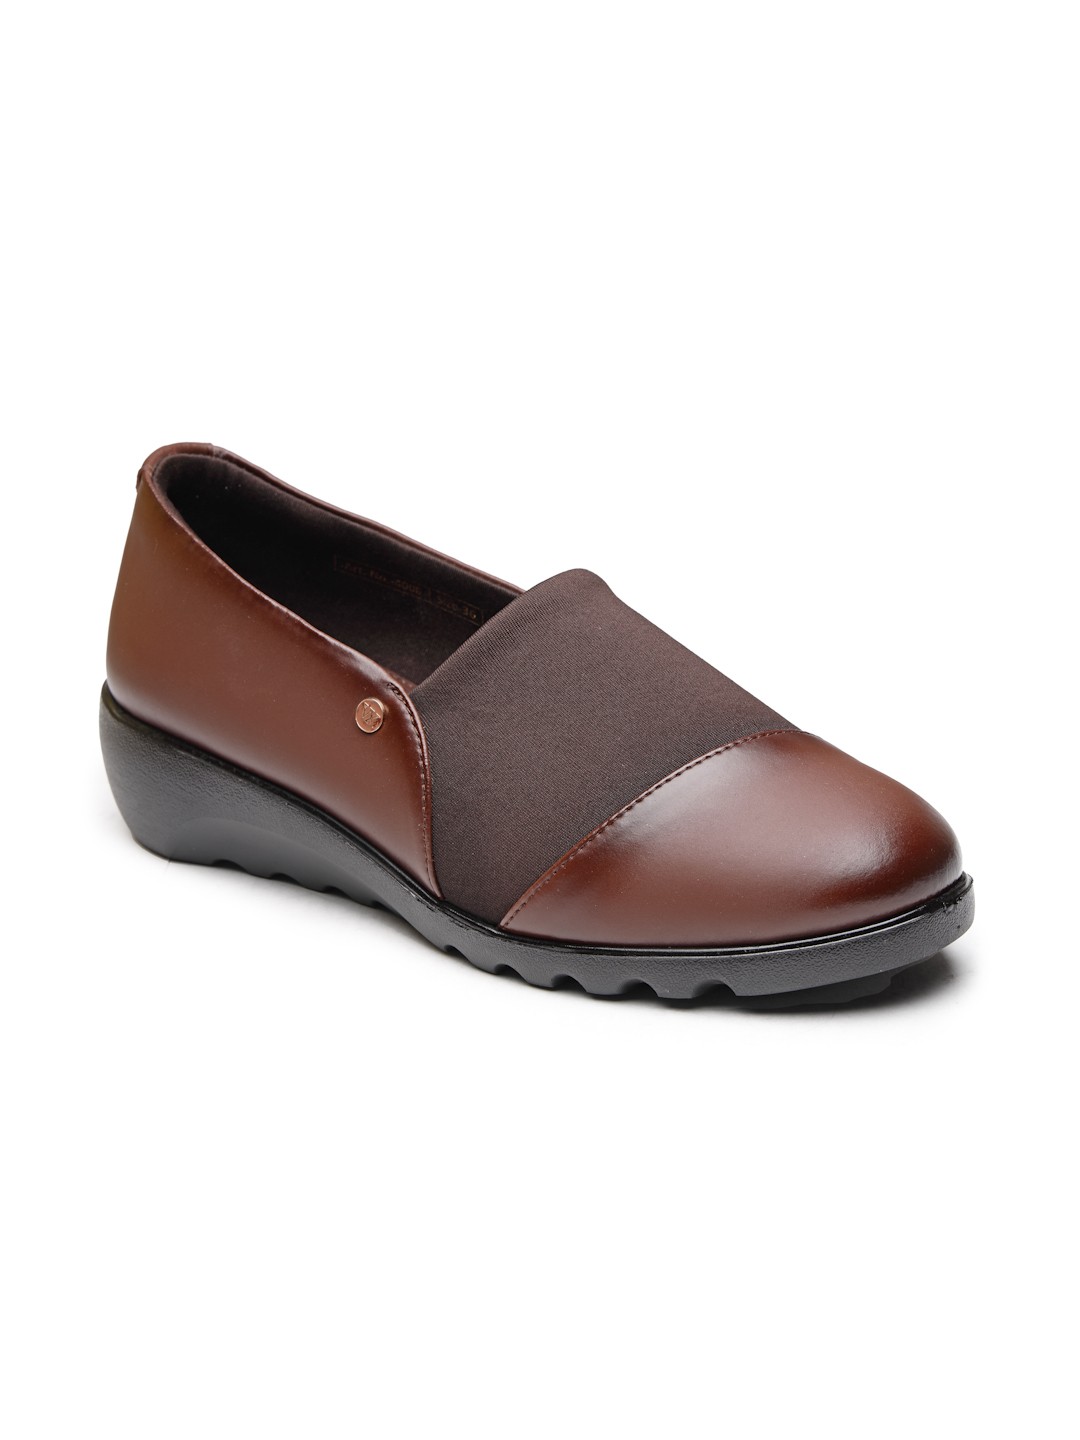 Buy Von Wellx Germany Comfort Women's Brown Casual Shoes Ayla Online in Sri Lanka